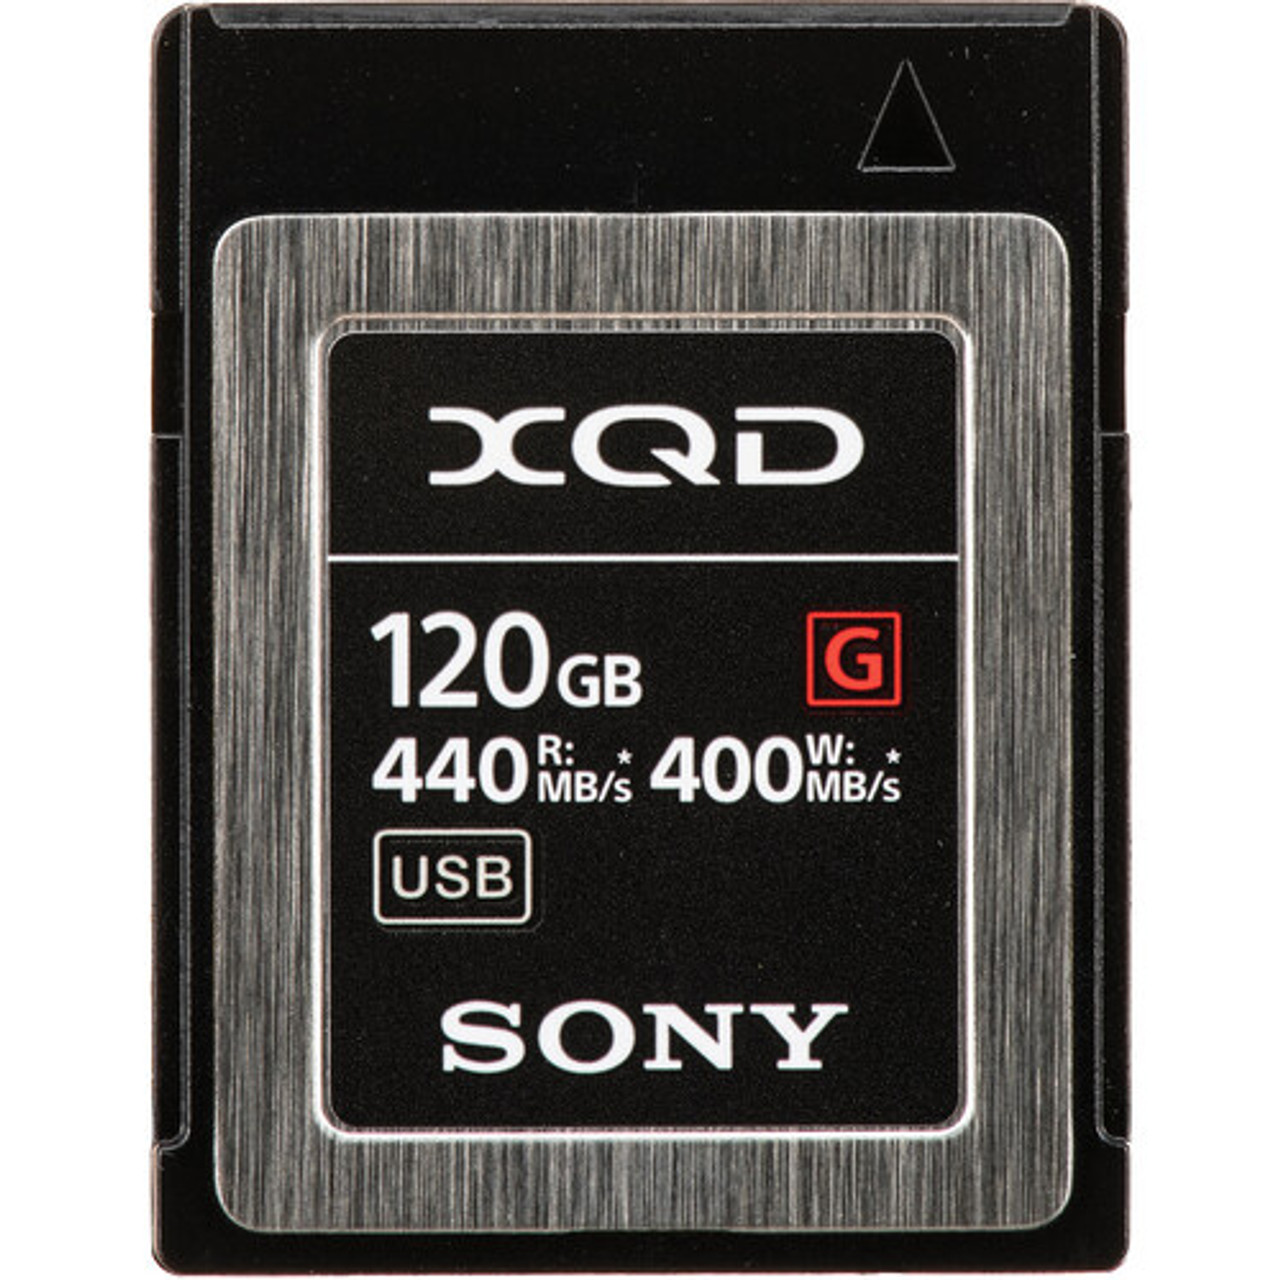 SONY XQD G SERIES MEMORY CARD (120GB)